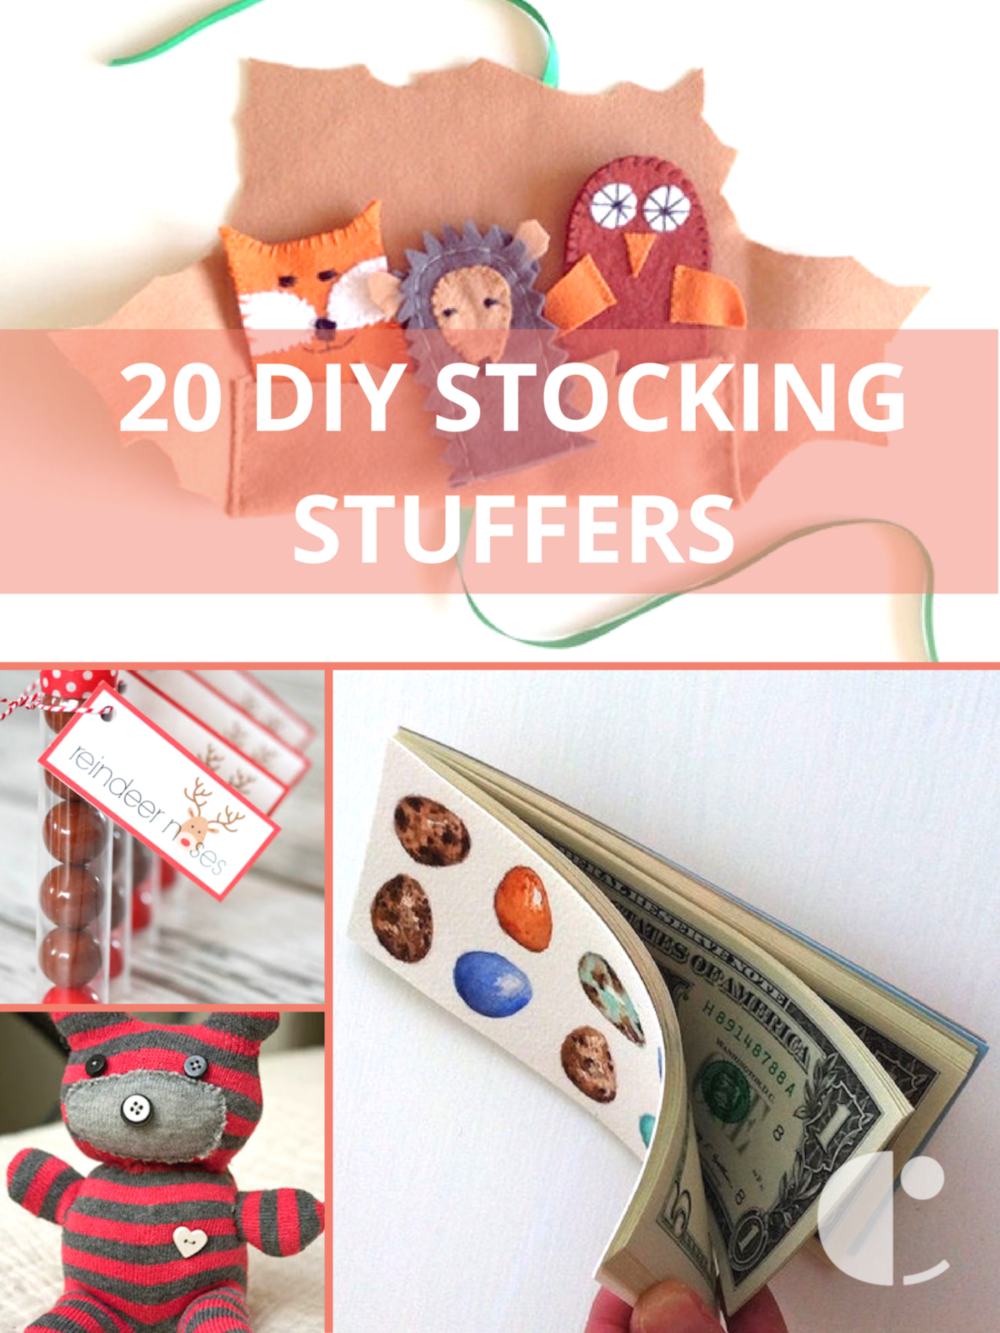 20 DIY stocking stuffers